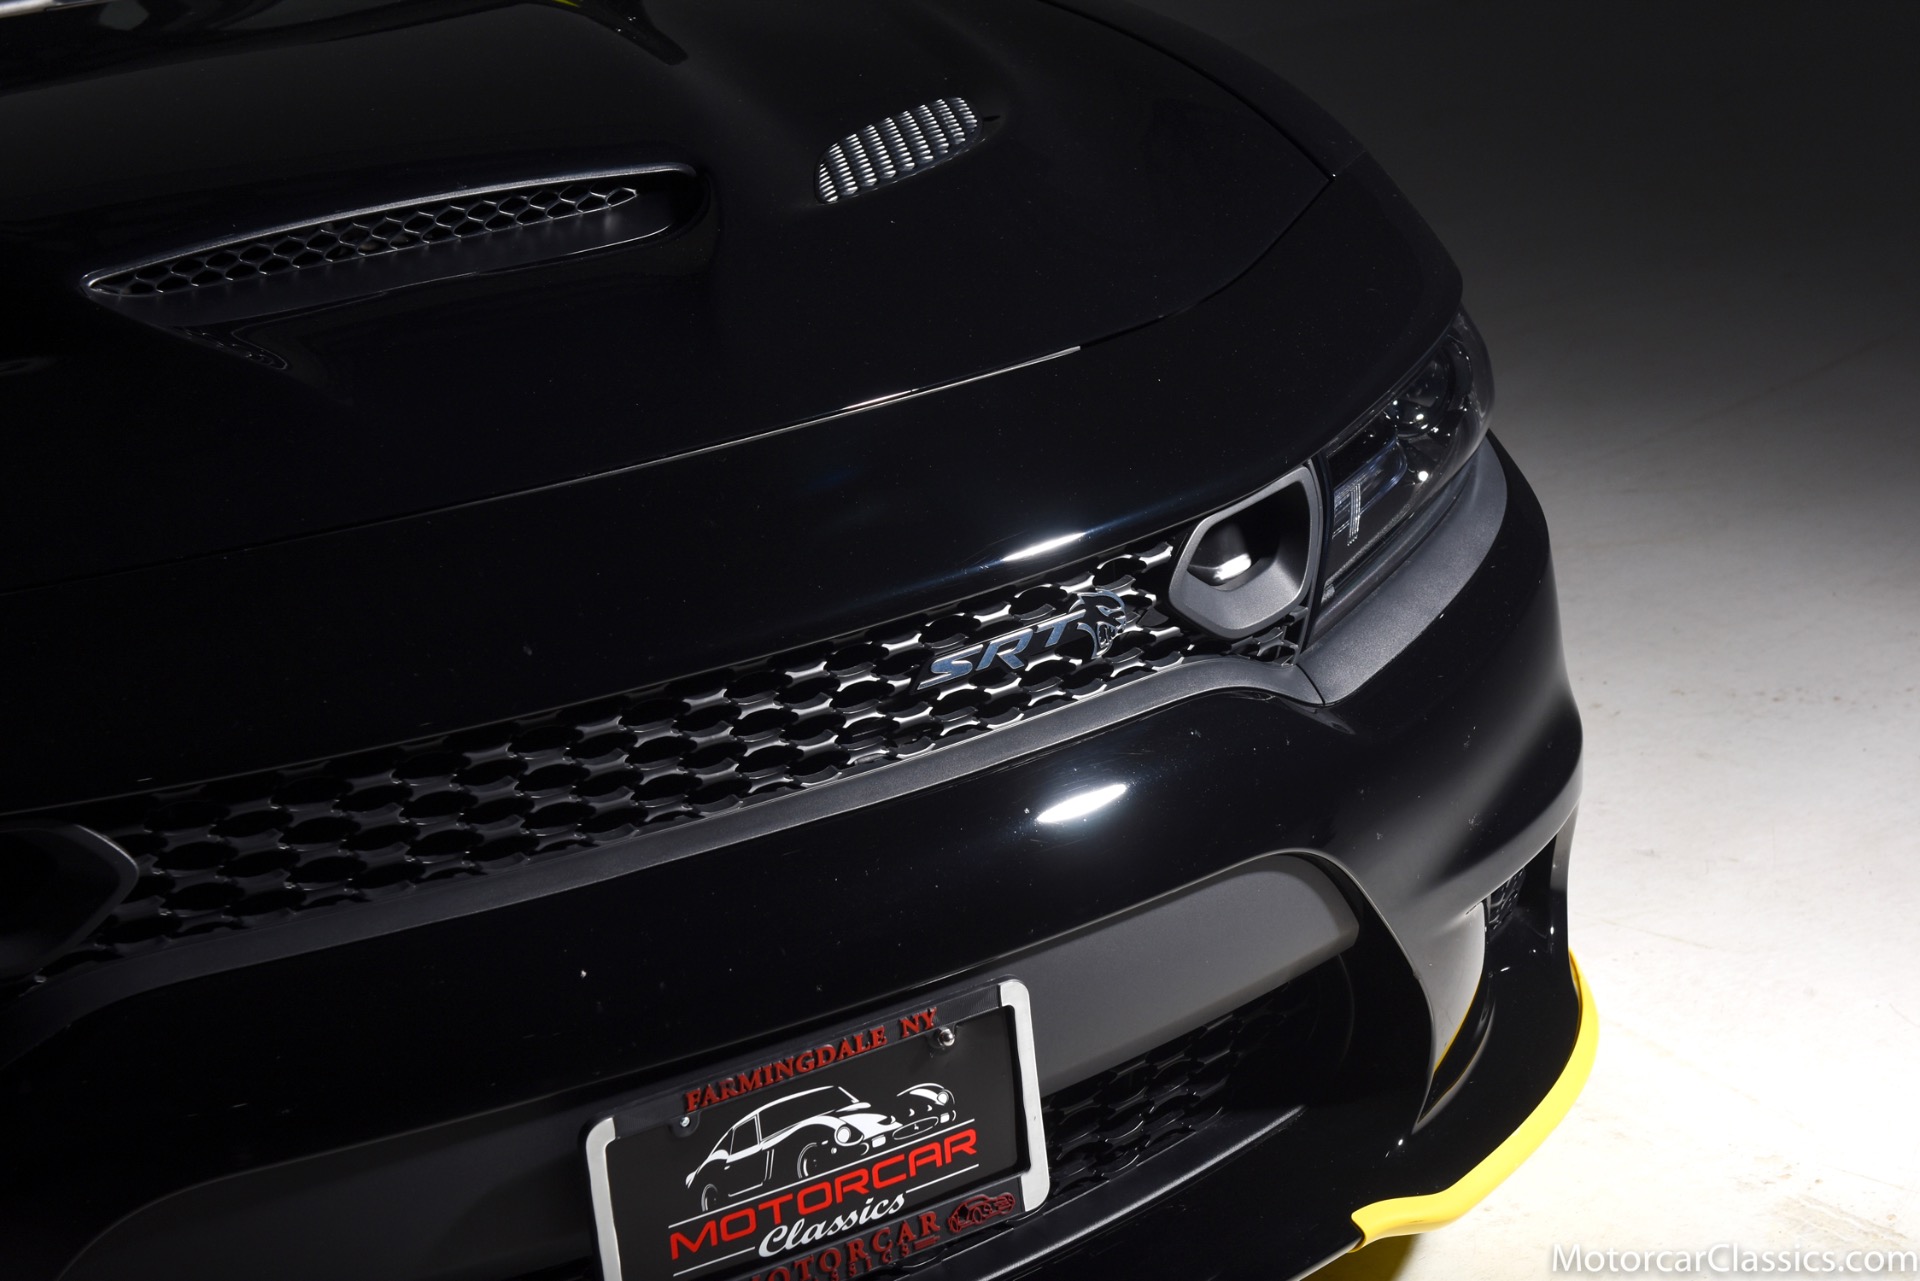 2019 Dodge Charger SRT Hellcat